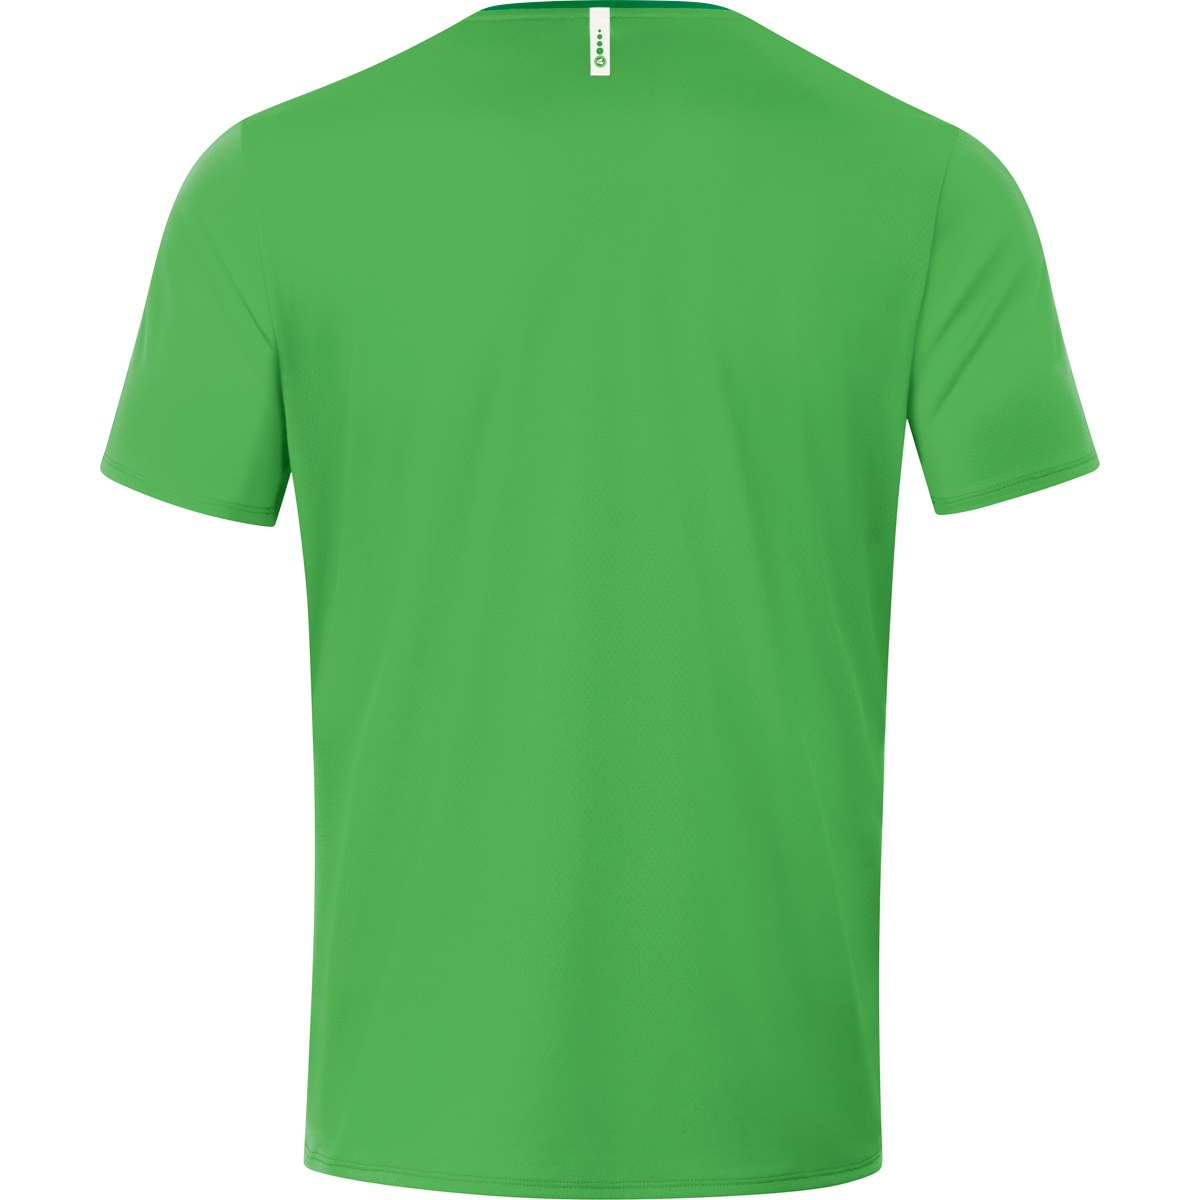 green/sportgrün, T-Shirt soft 2.0 Kinder, Champ 116, 6120 Gr. JAKO